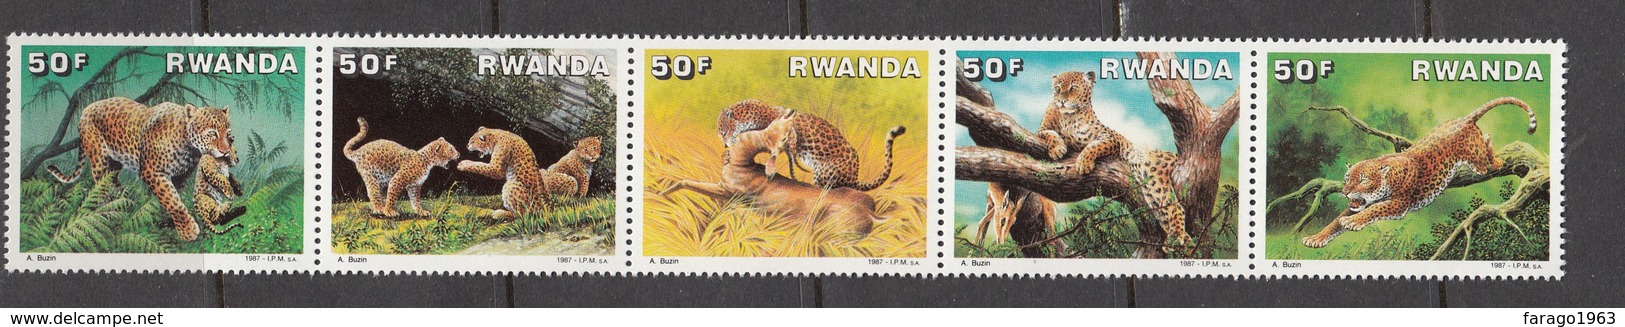 1987 Rwanda Rwandaise  Leopards  Complete Strip/set Of 5 MNH. - Unused Stamps